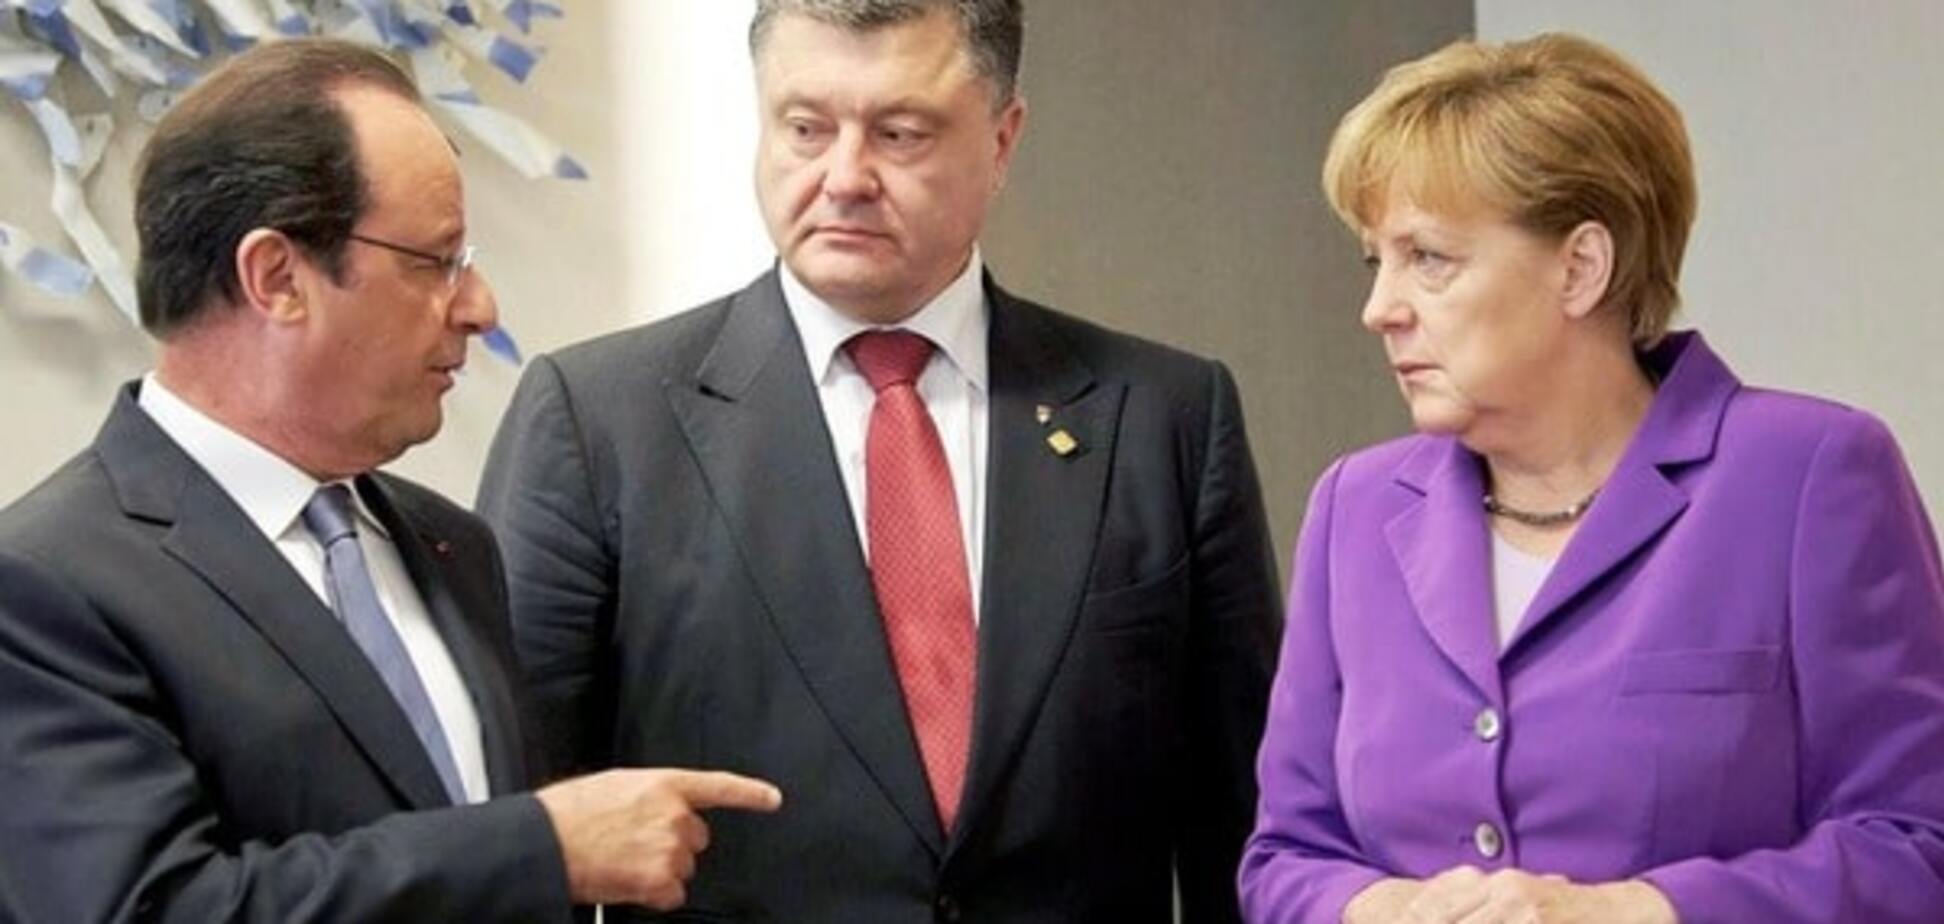 Лещата стискаються: дипломат пояснив, чому Євросоюз посилить тиск на Київ